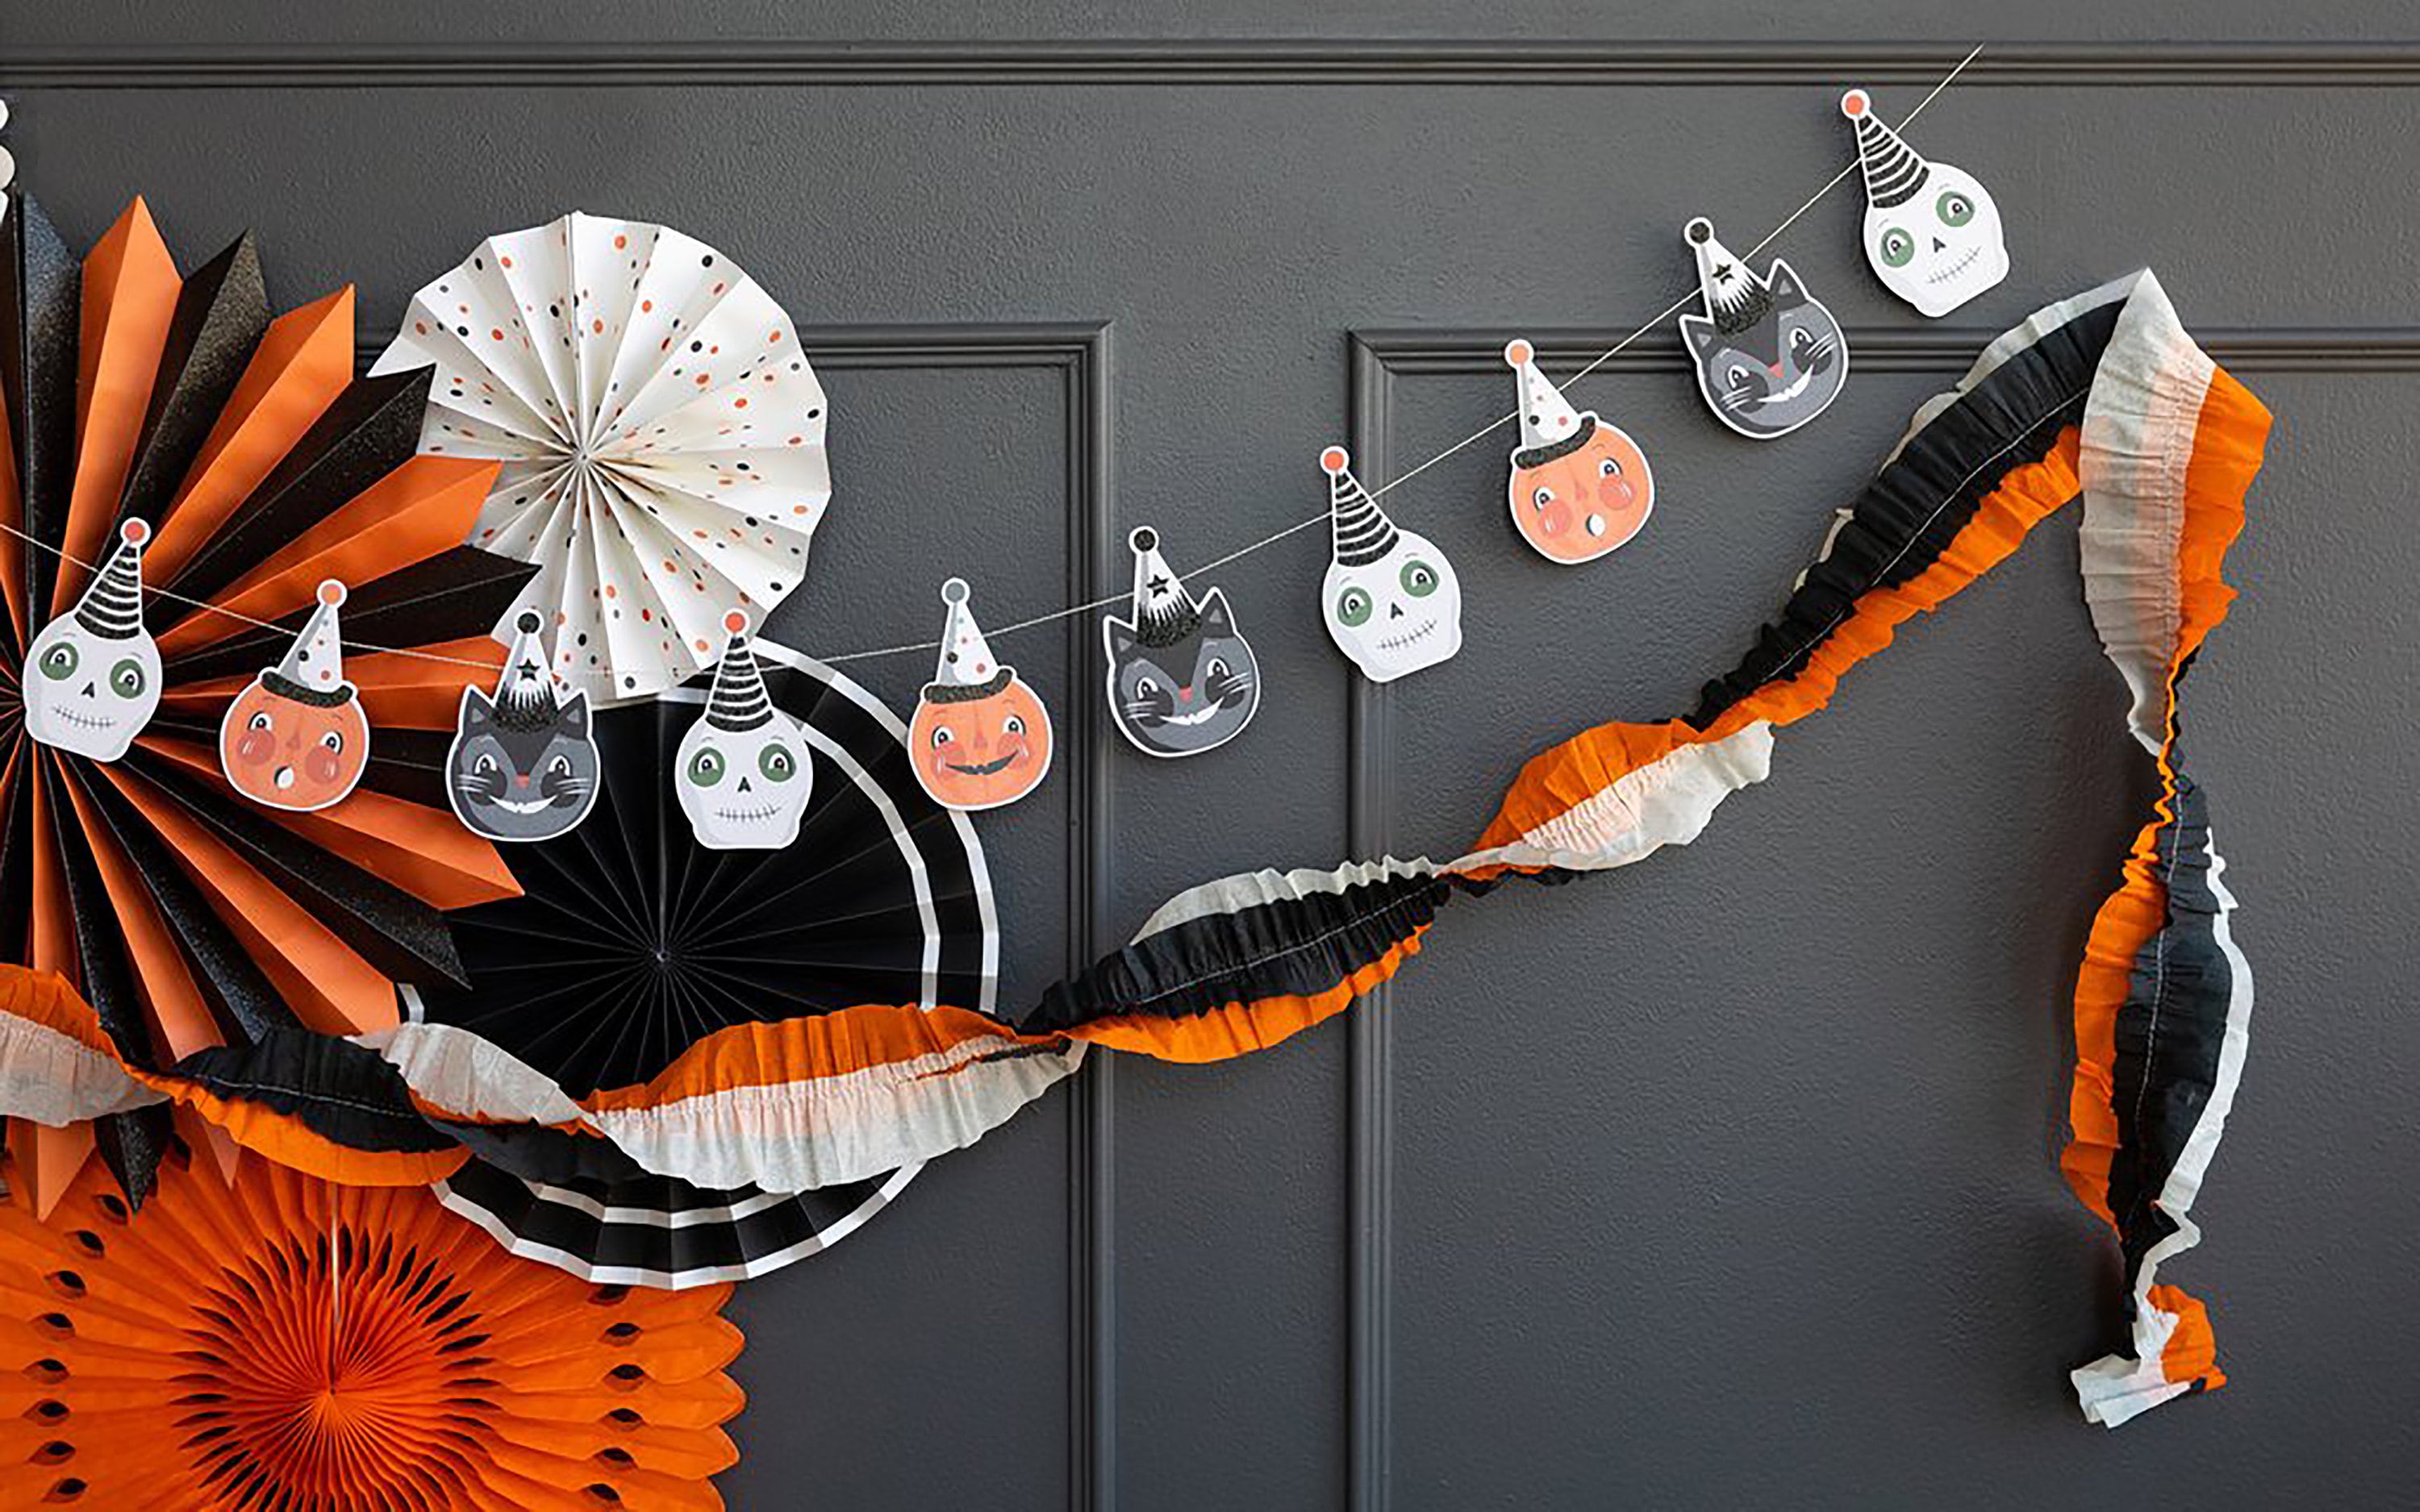 Halloween Party Banner | Vintage Halloween Decor - Retro Halloween Decorations - Pumpkin Garland - Skull Garland - Halloween Black Cat Decor